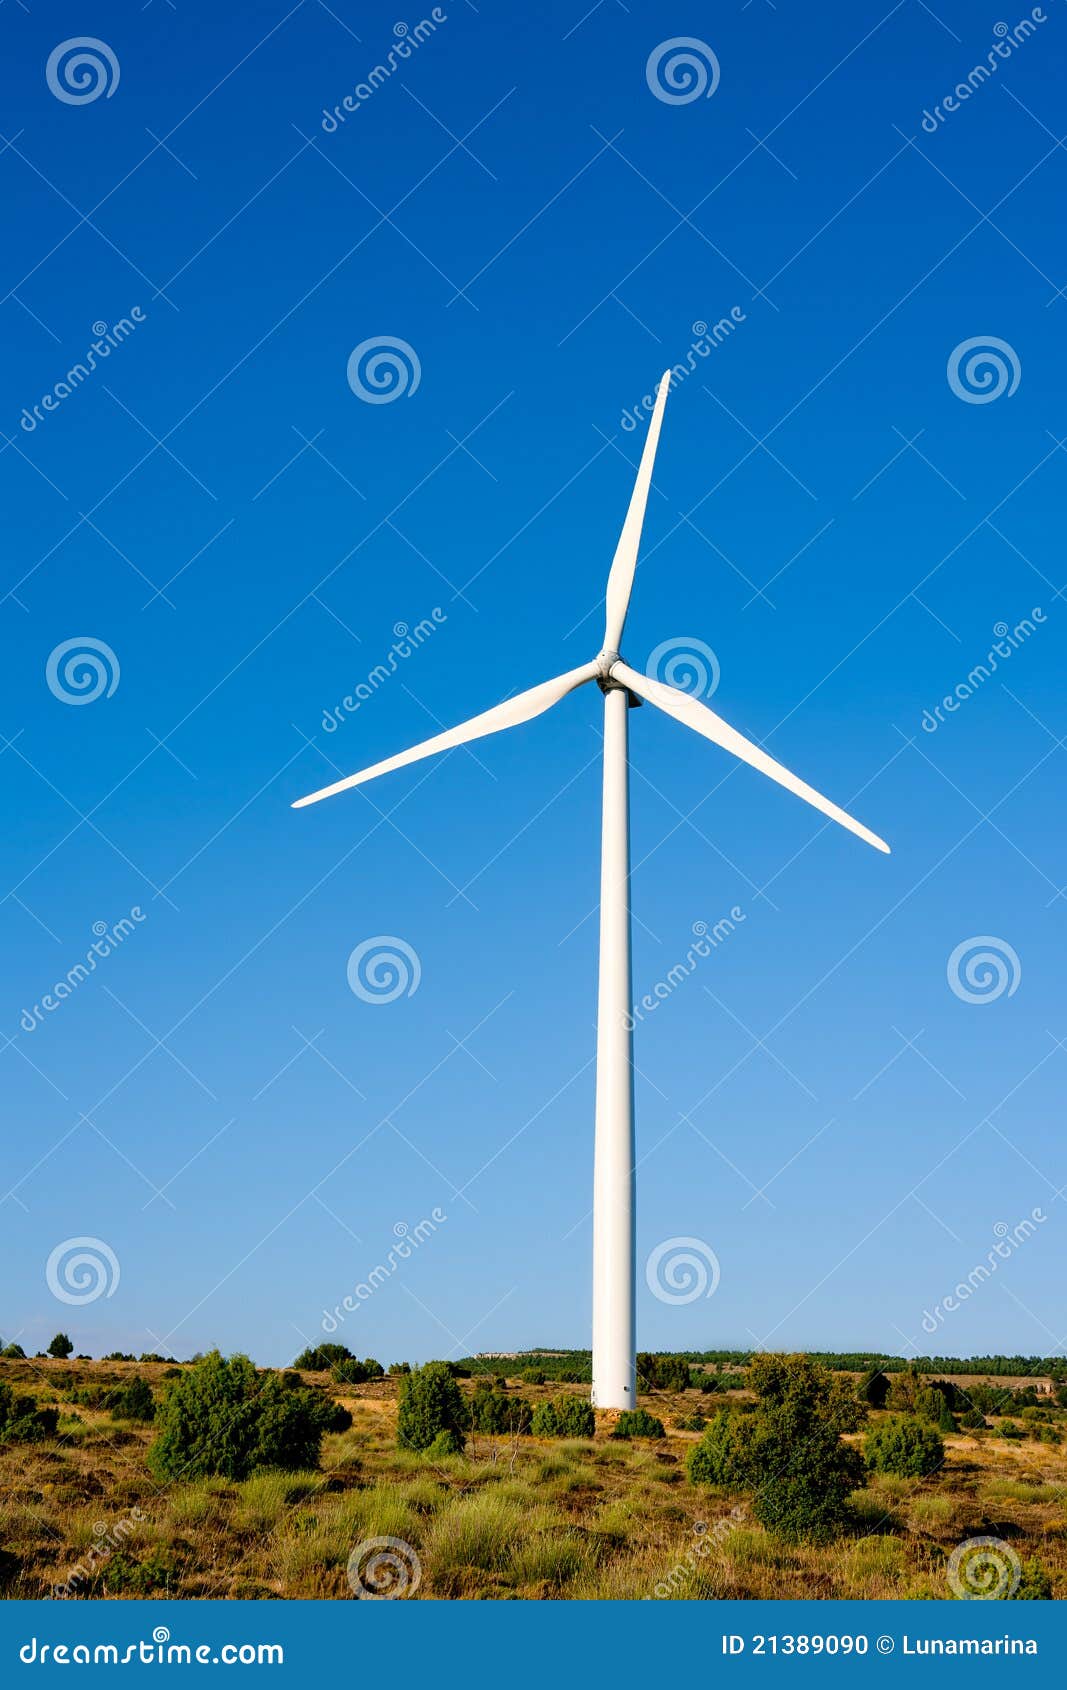 aerogenerator windmill in sunny blue sky